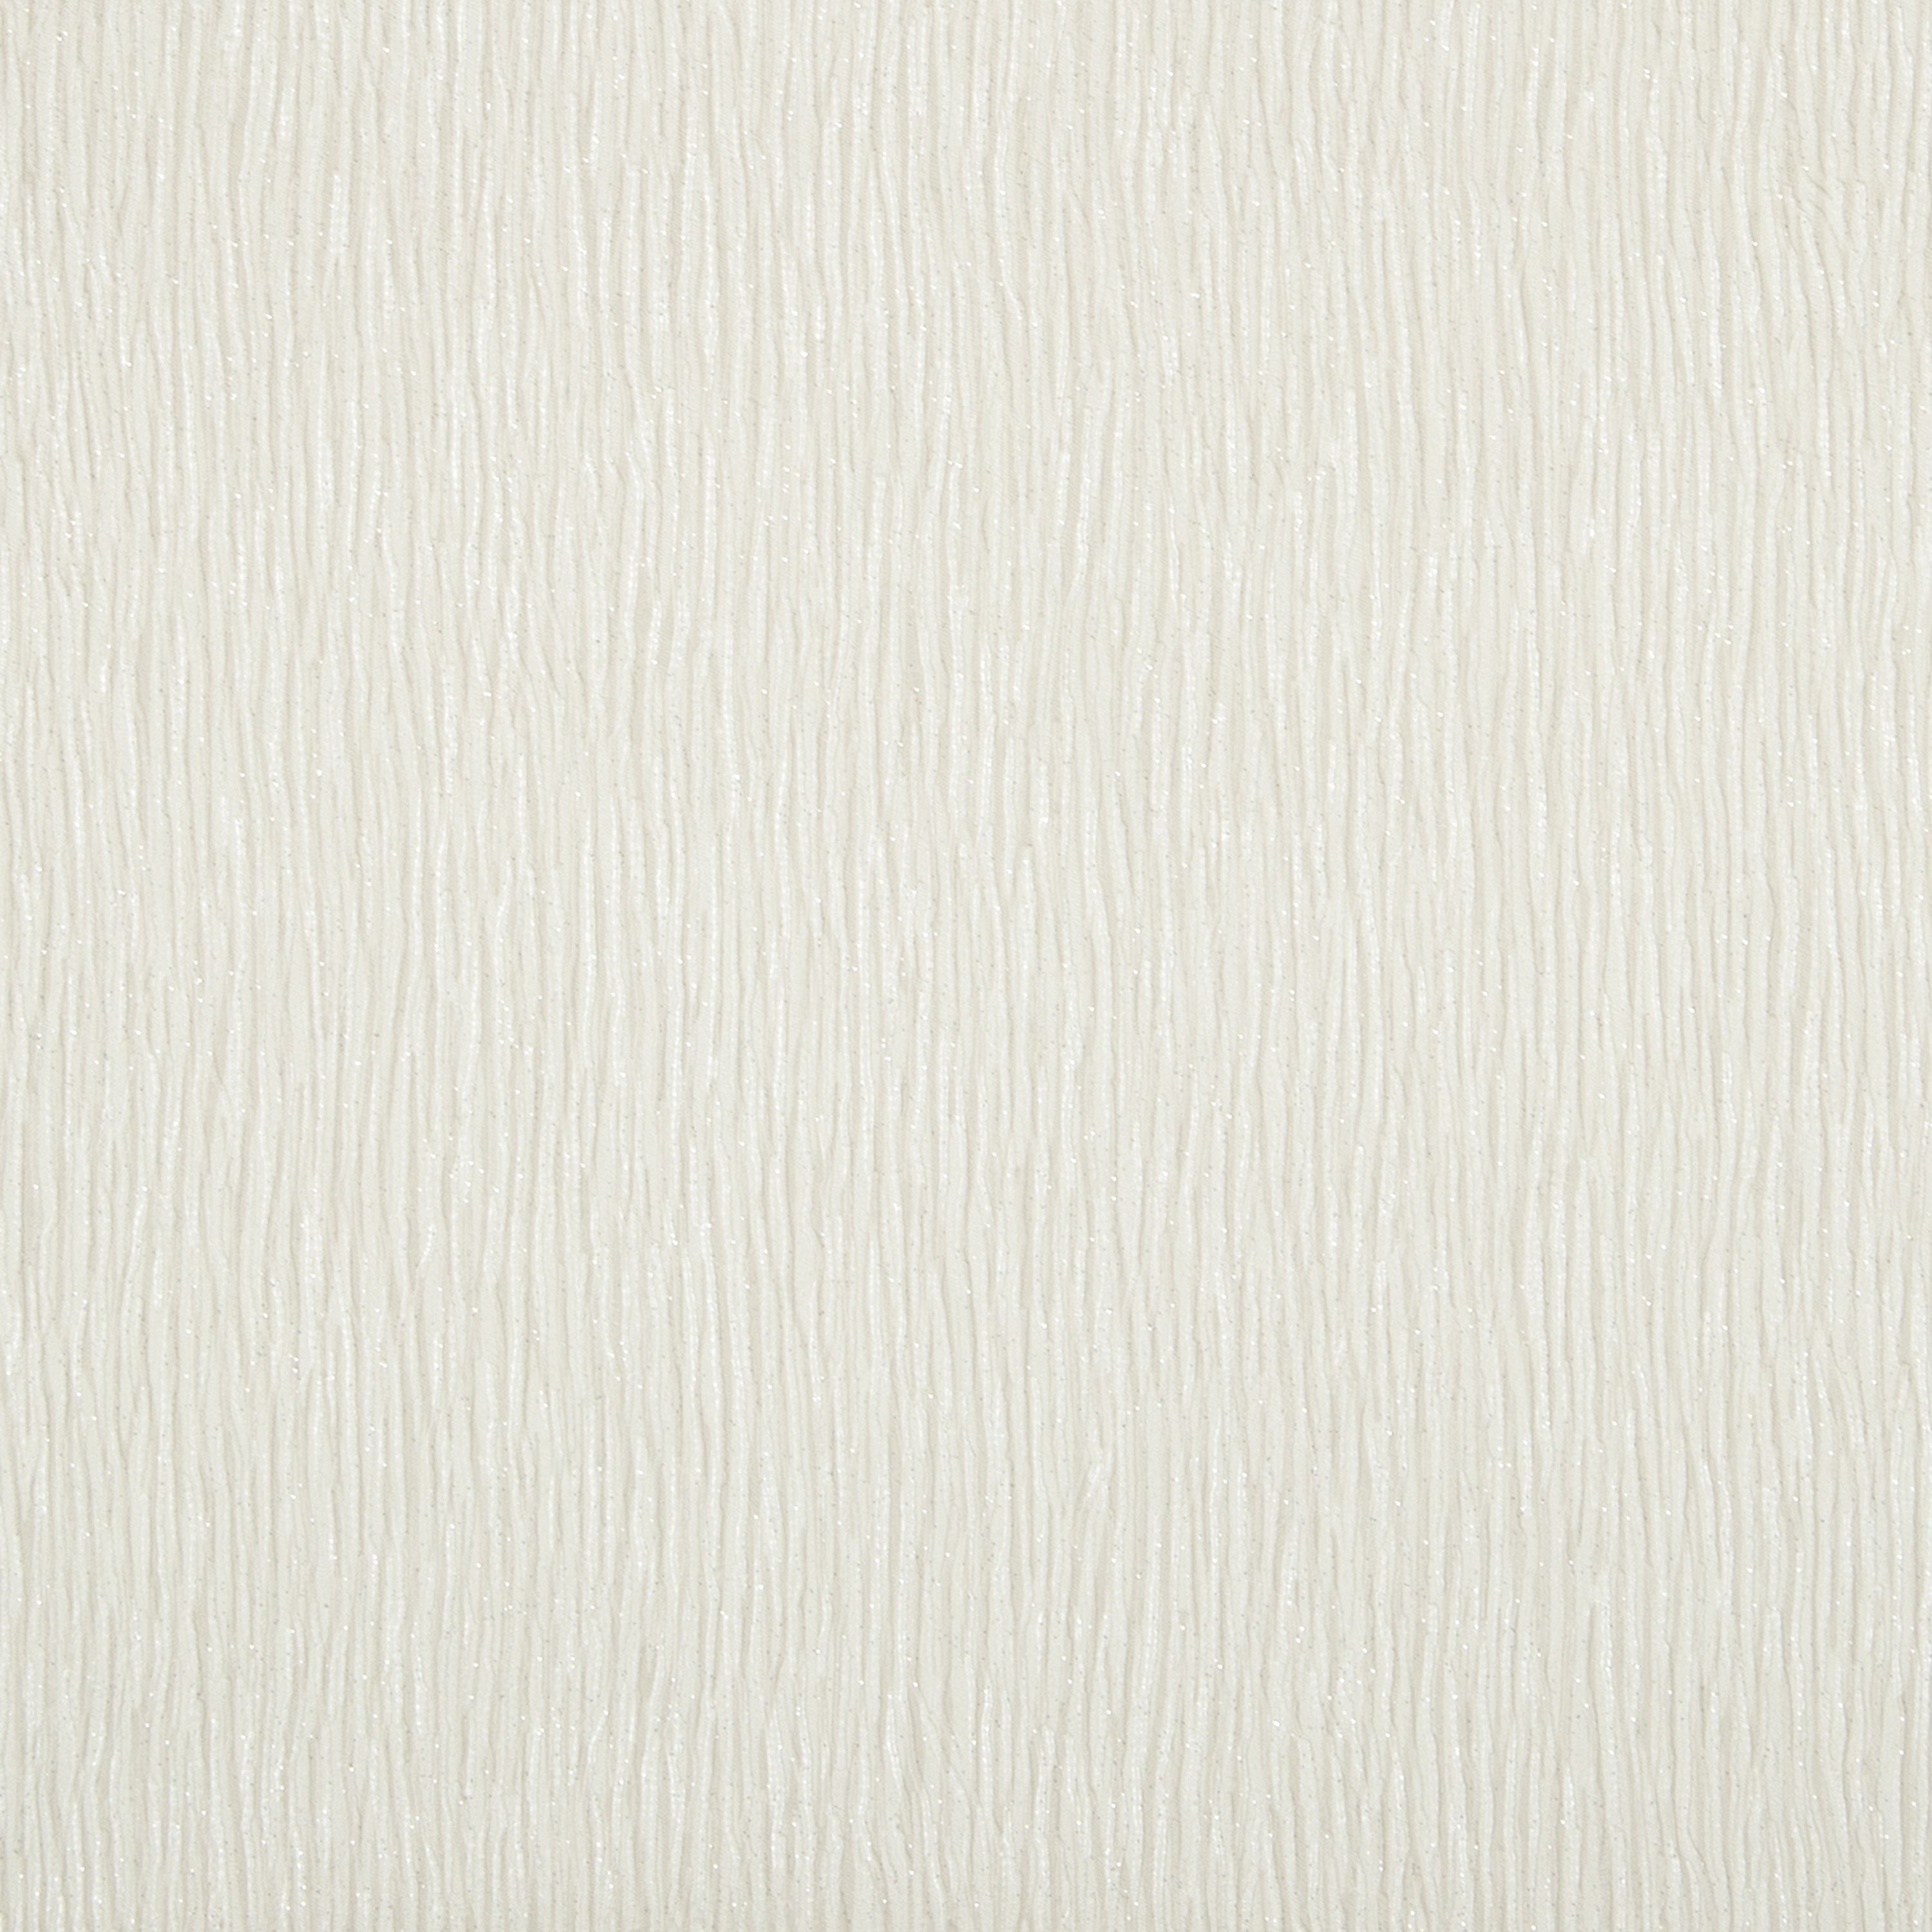 Boutique Shimmer Ivory Metallic & glitter effect Wave Textured Wallpaper Sample